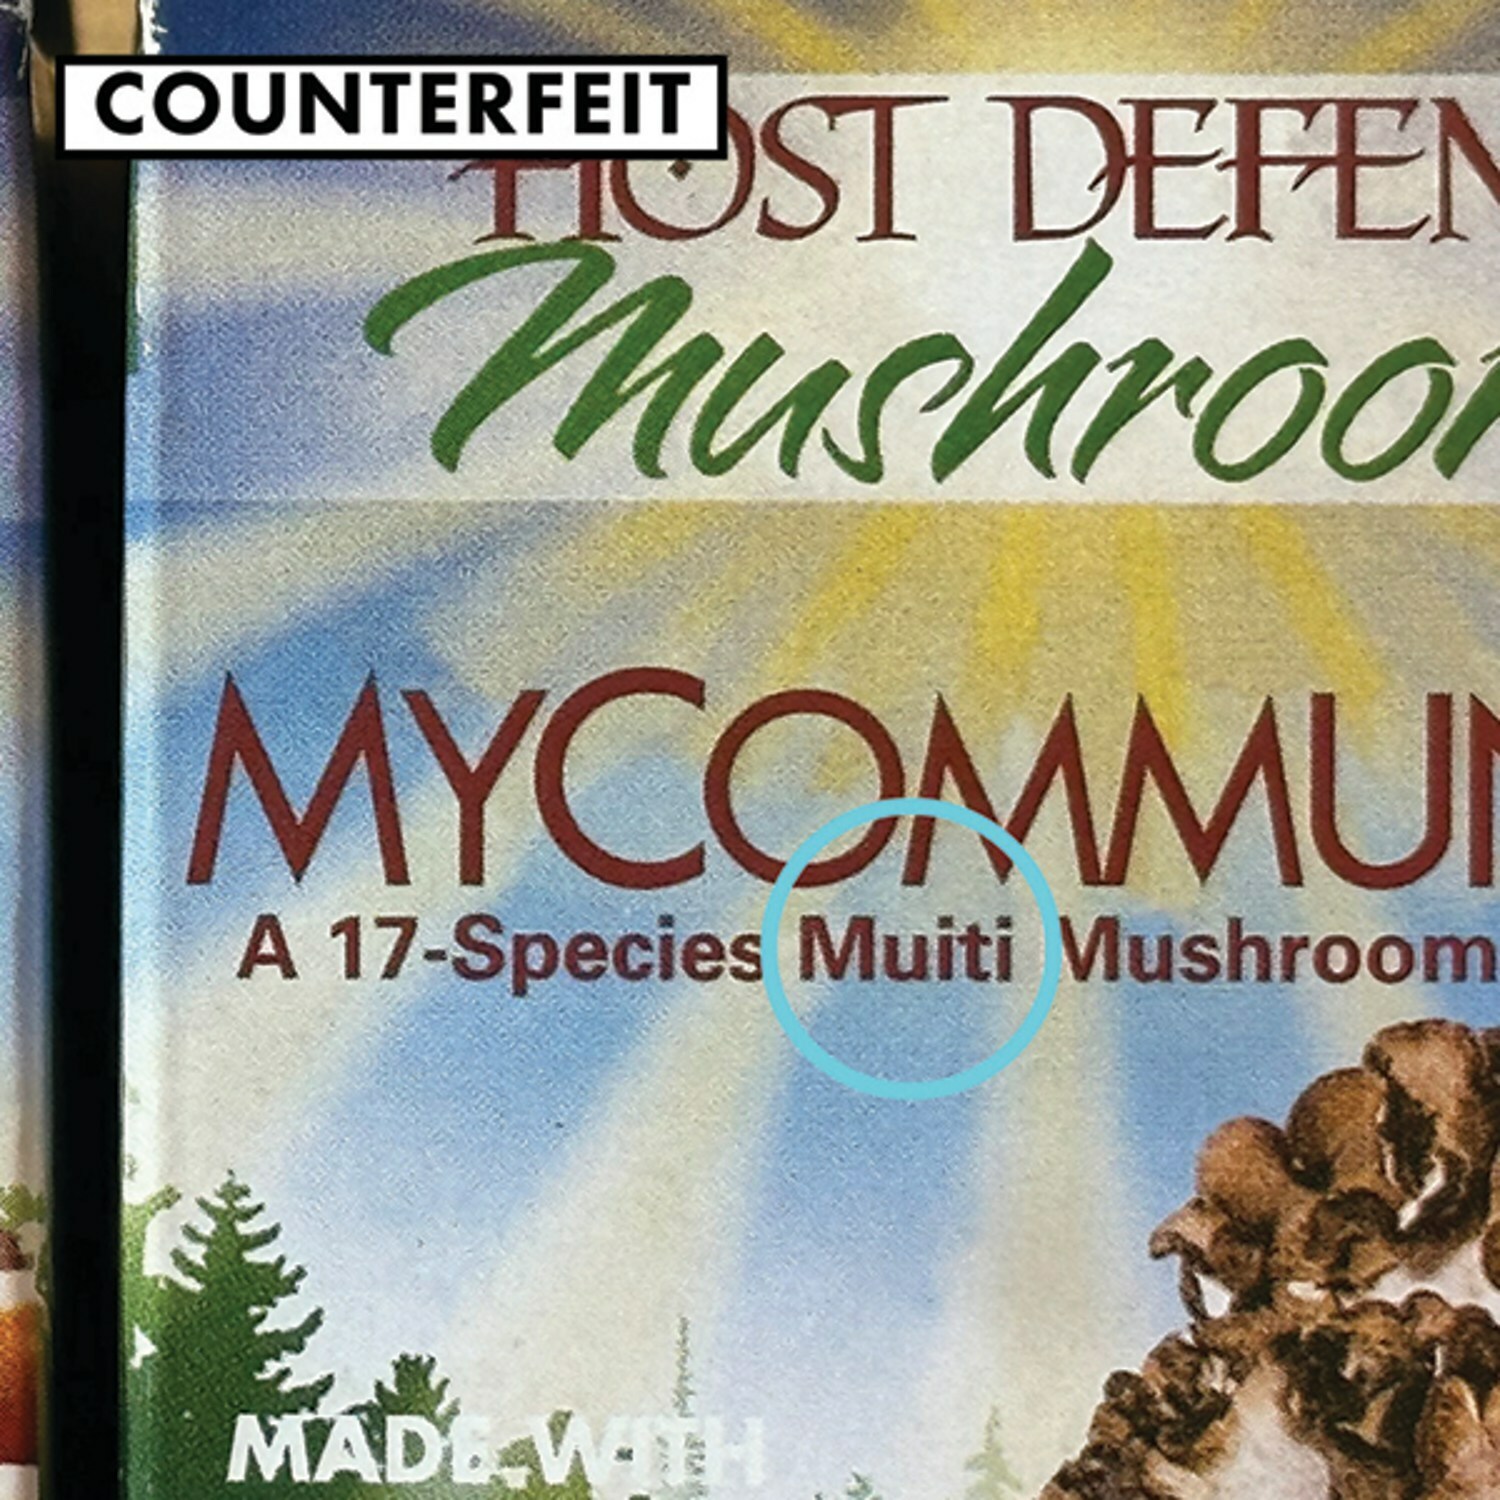 Fungi_Perfecti_MyCommunity_120_Misspelling_counterfeit_image_2.jpg